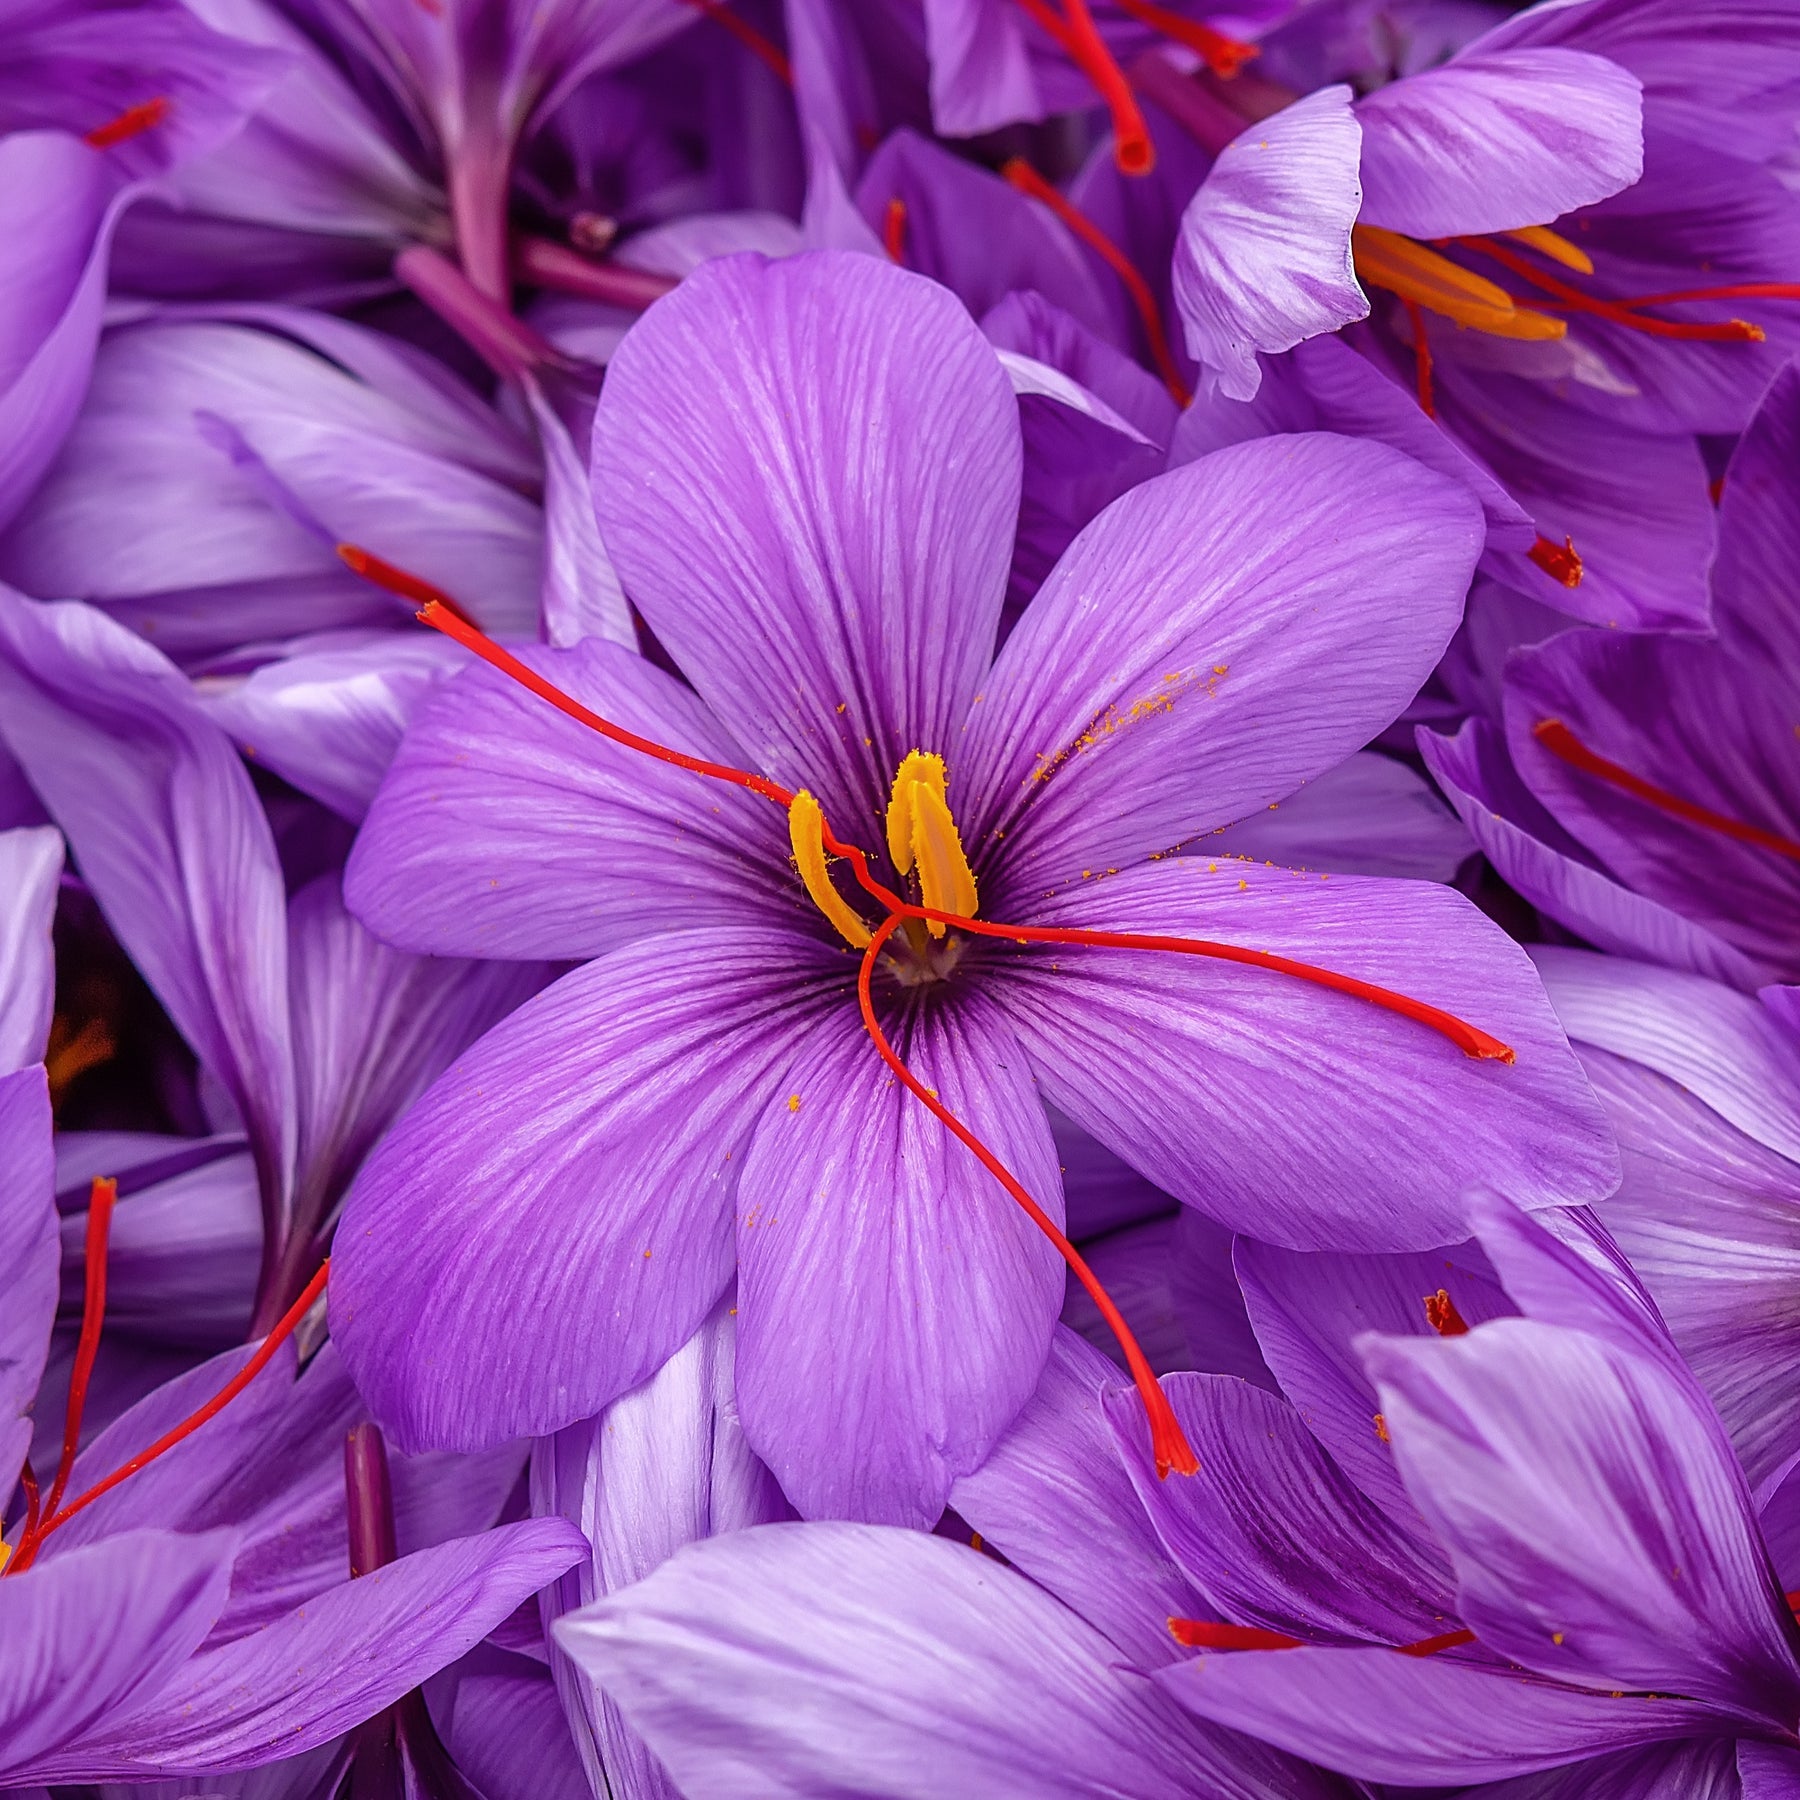 Crocus safran - Crocus sativus - Bulbes à fleurs